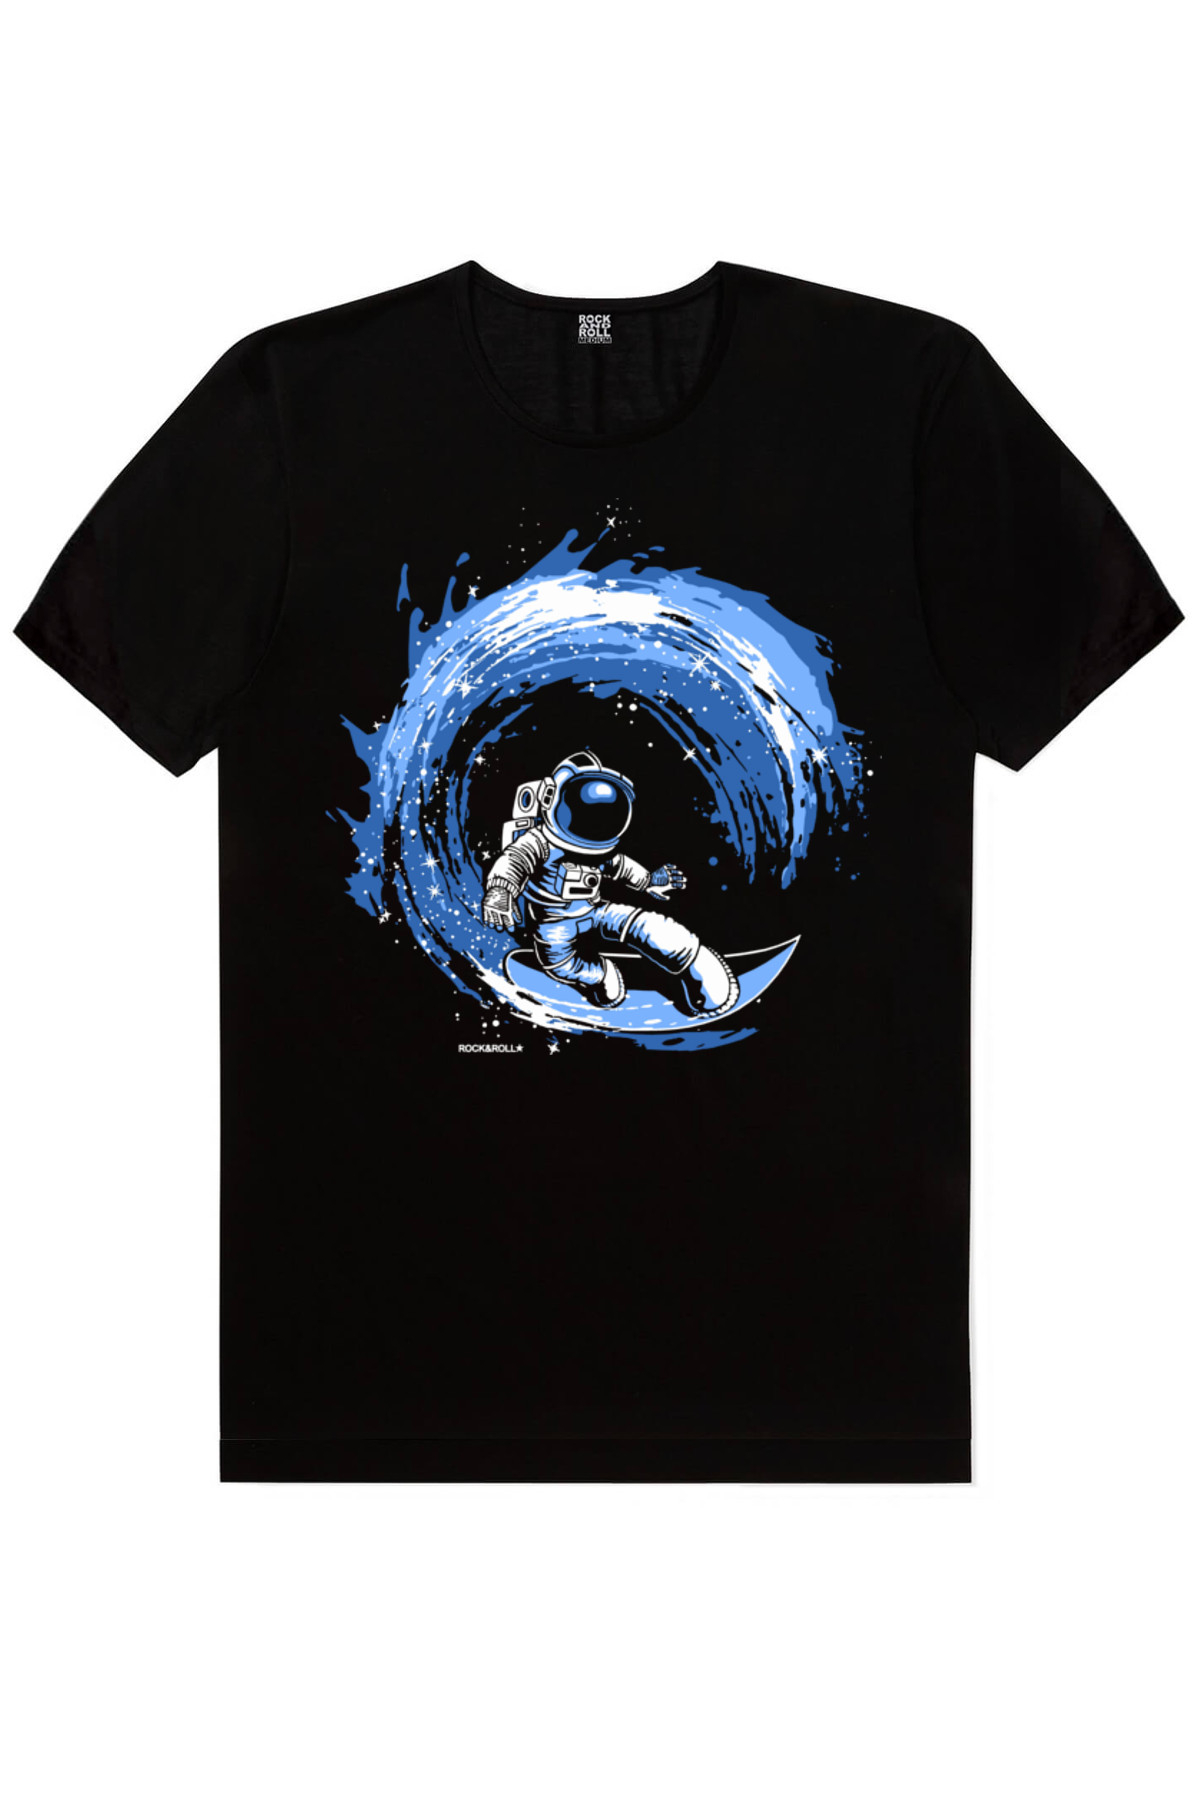 Galaktik Sörfcü, Havuzda Astronot Çocuk Tişört 2'li Eko Paket